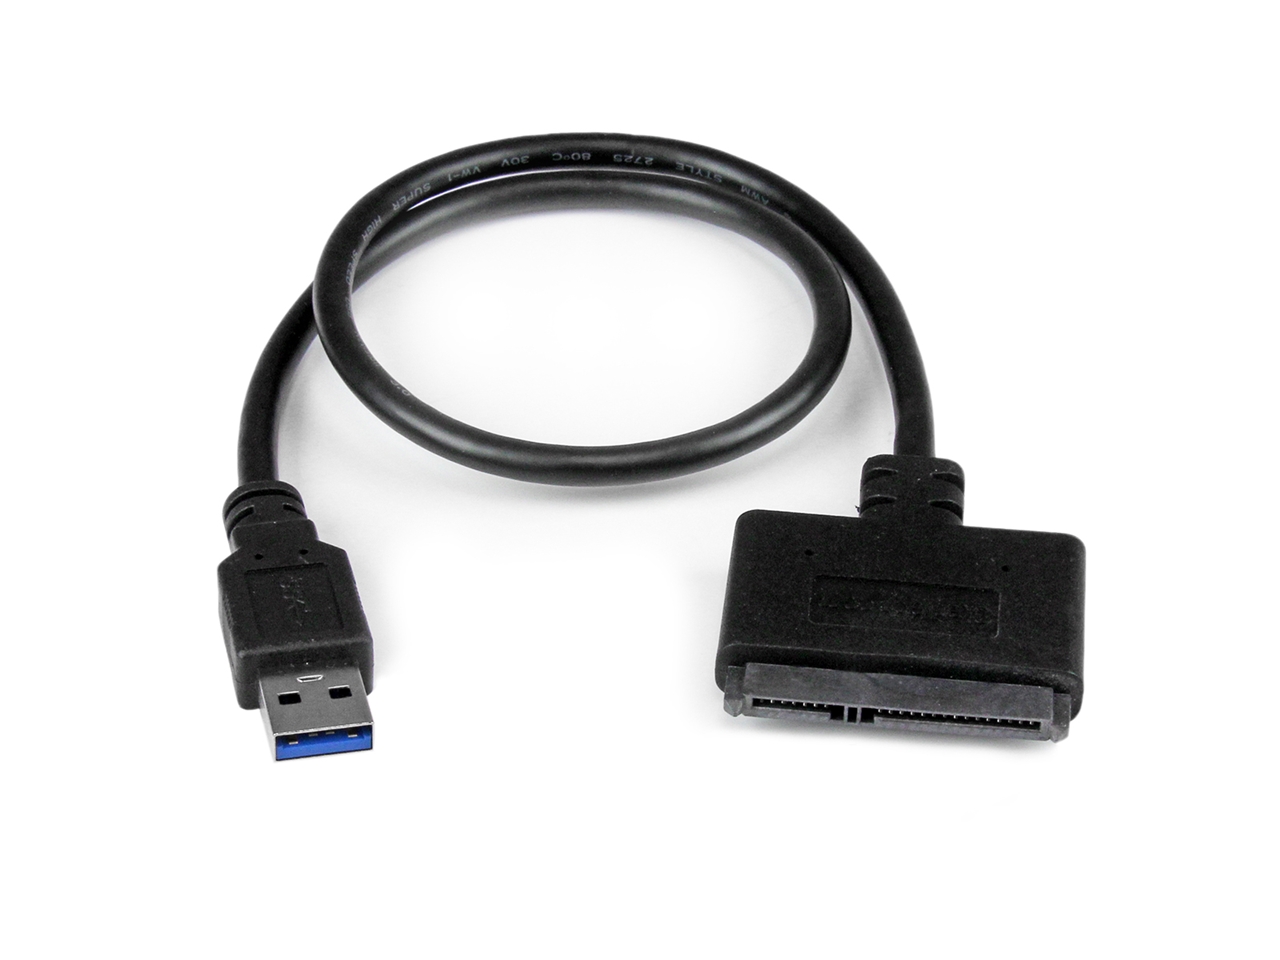 Fragua trapo pegar USB 3.0 To 2.5” SATA III Hard Drive Adapter at Cables N More